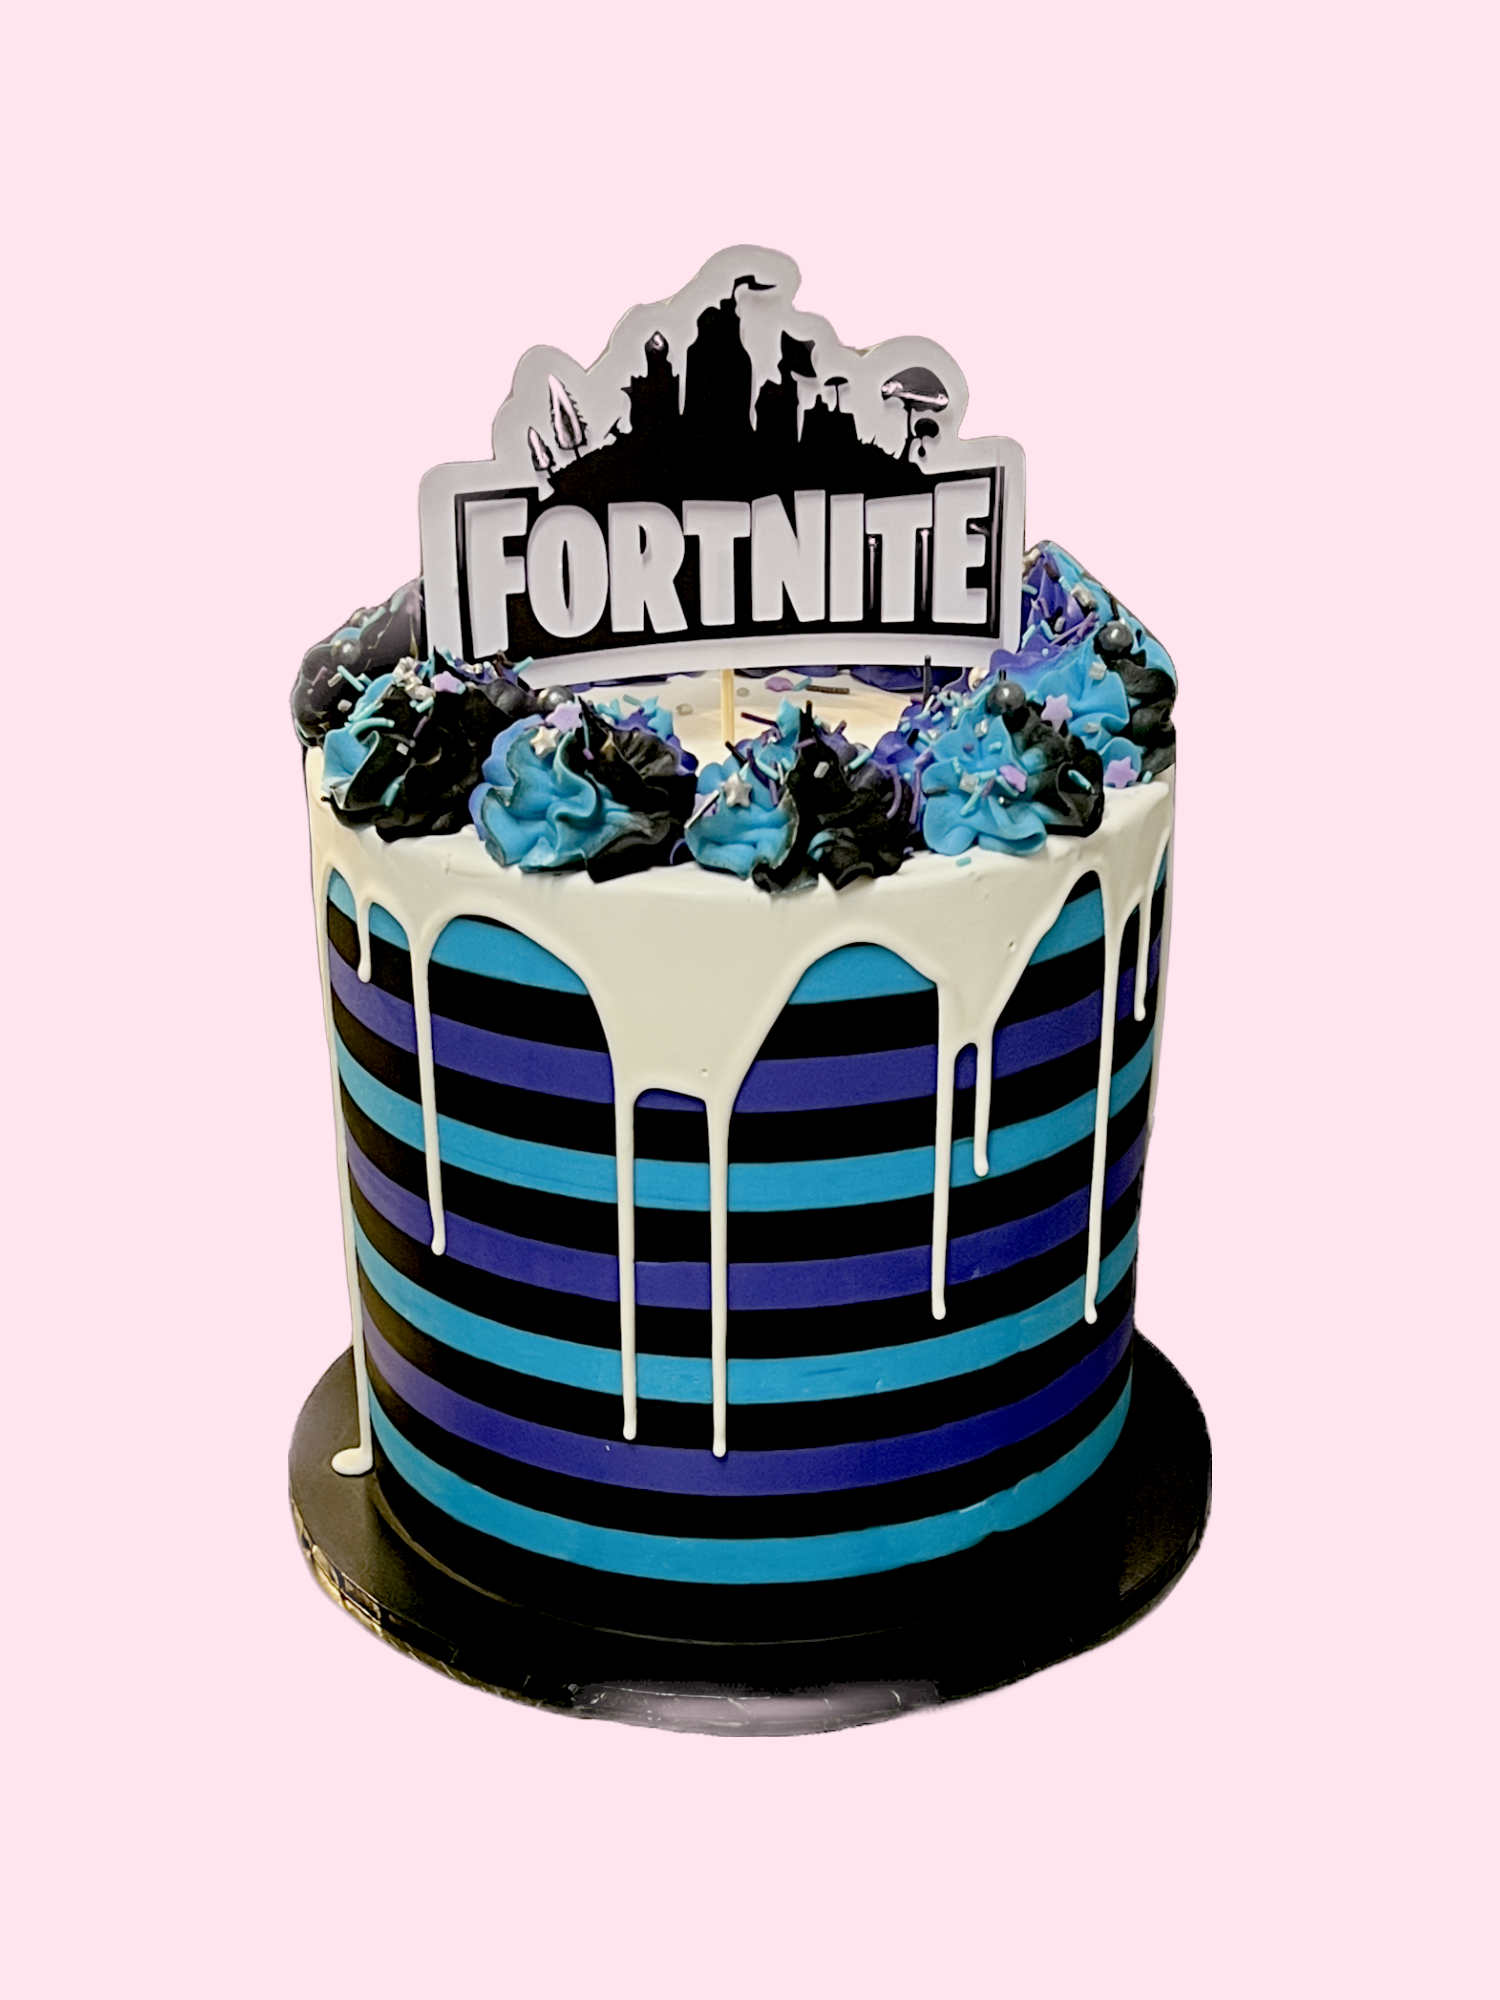 Cake Time - Fortnite Cake 💙 #cake #baking #homemade #caketimebg  #buttercream #fondant #birthday #happybirthday #12thbirthday #fortnite  #lootchest #medpack #chugjug #victoryroyale | Facebook